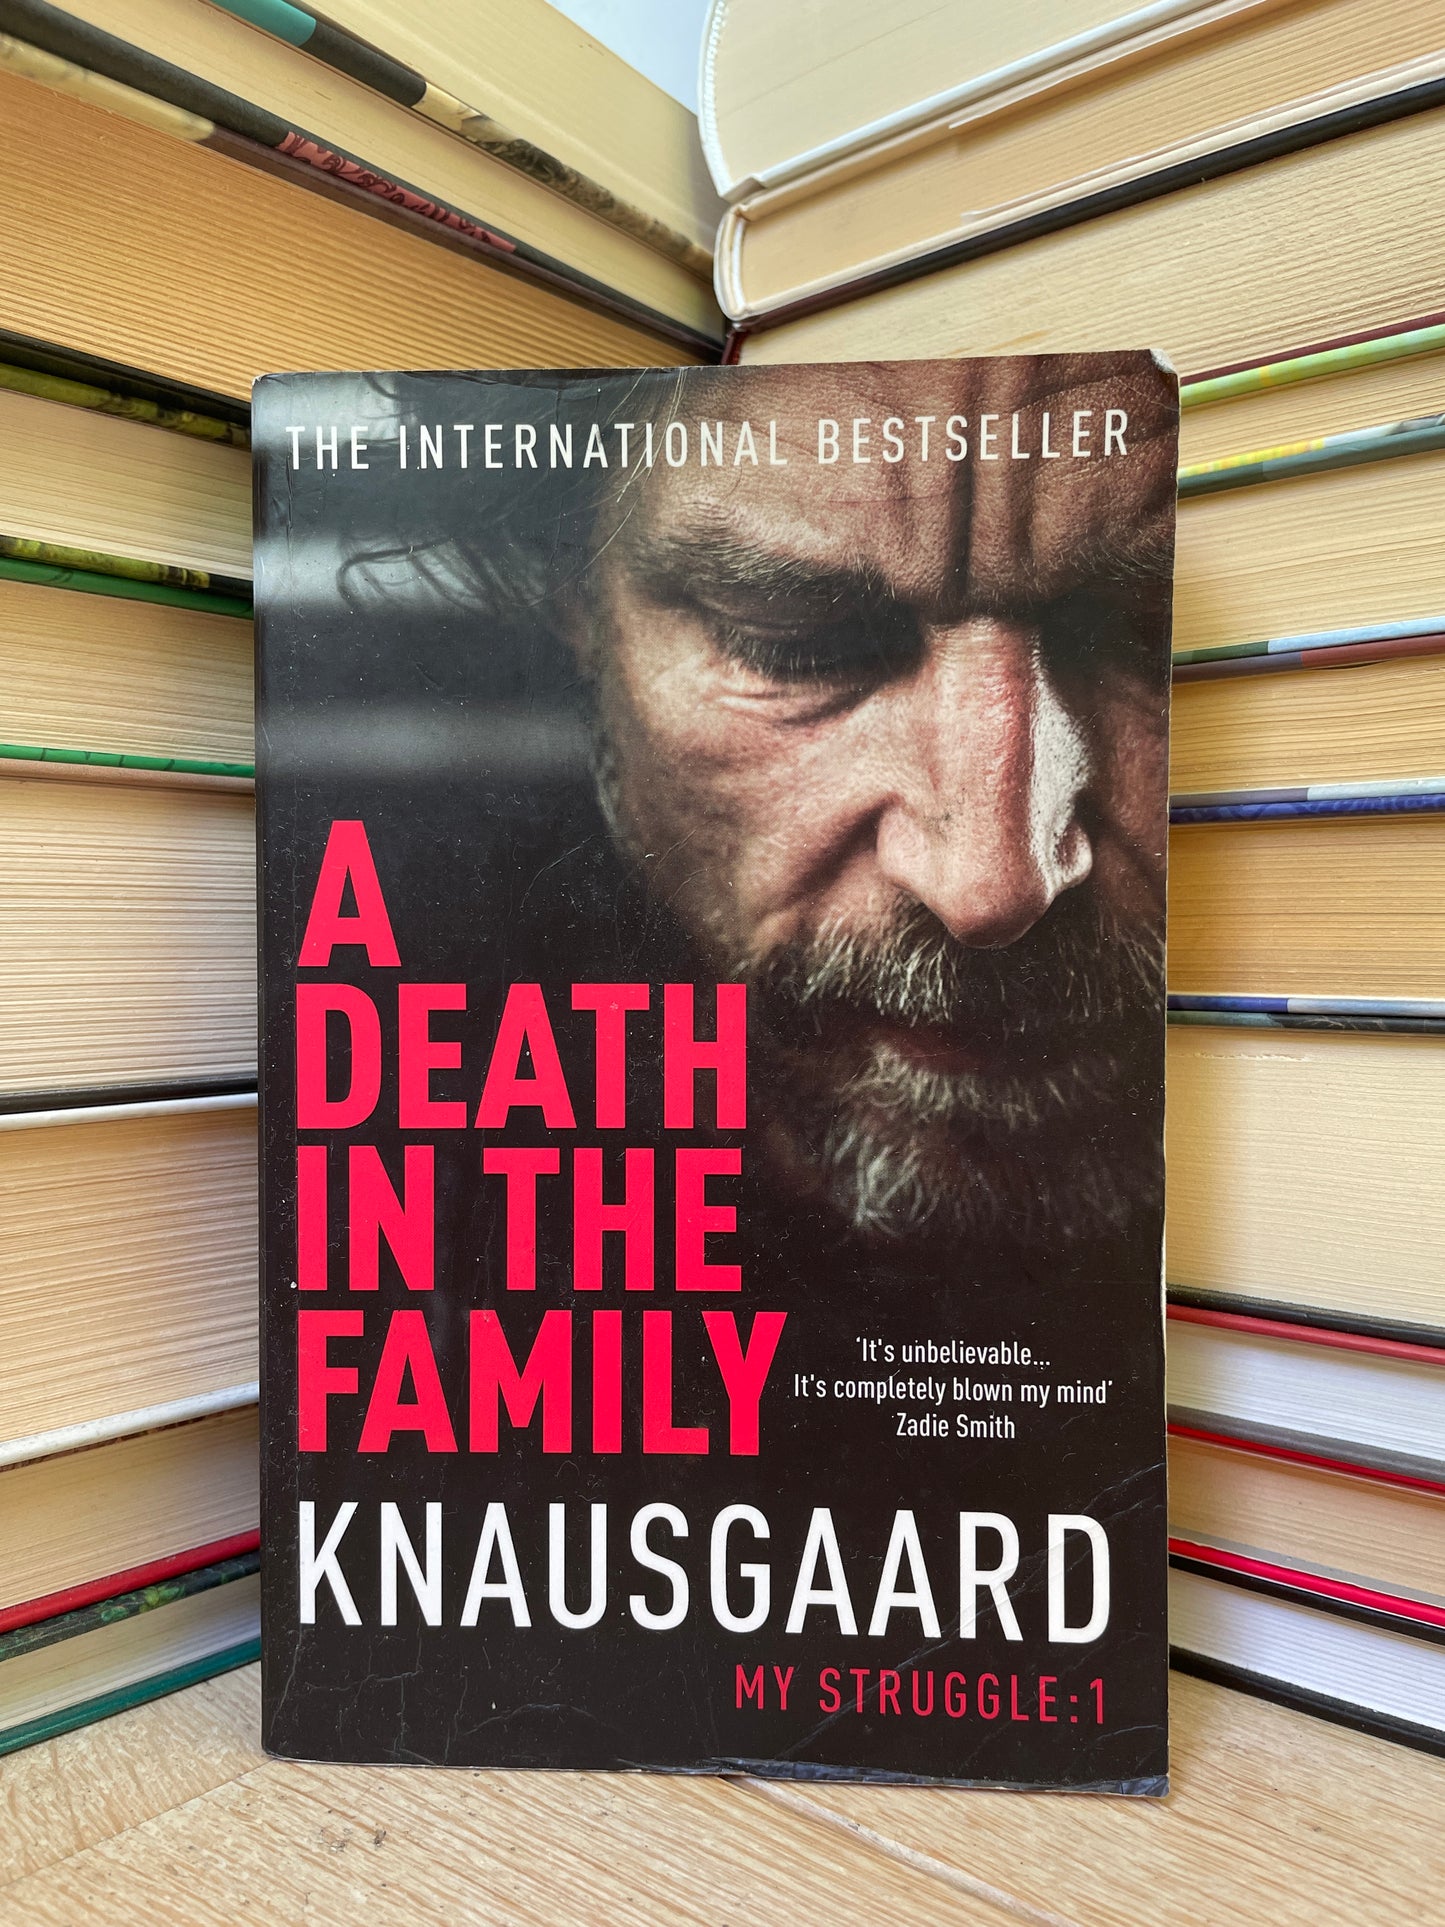 Karl Ove Knausgaard - My Struggle 1: A Death in the Family